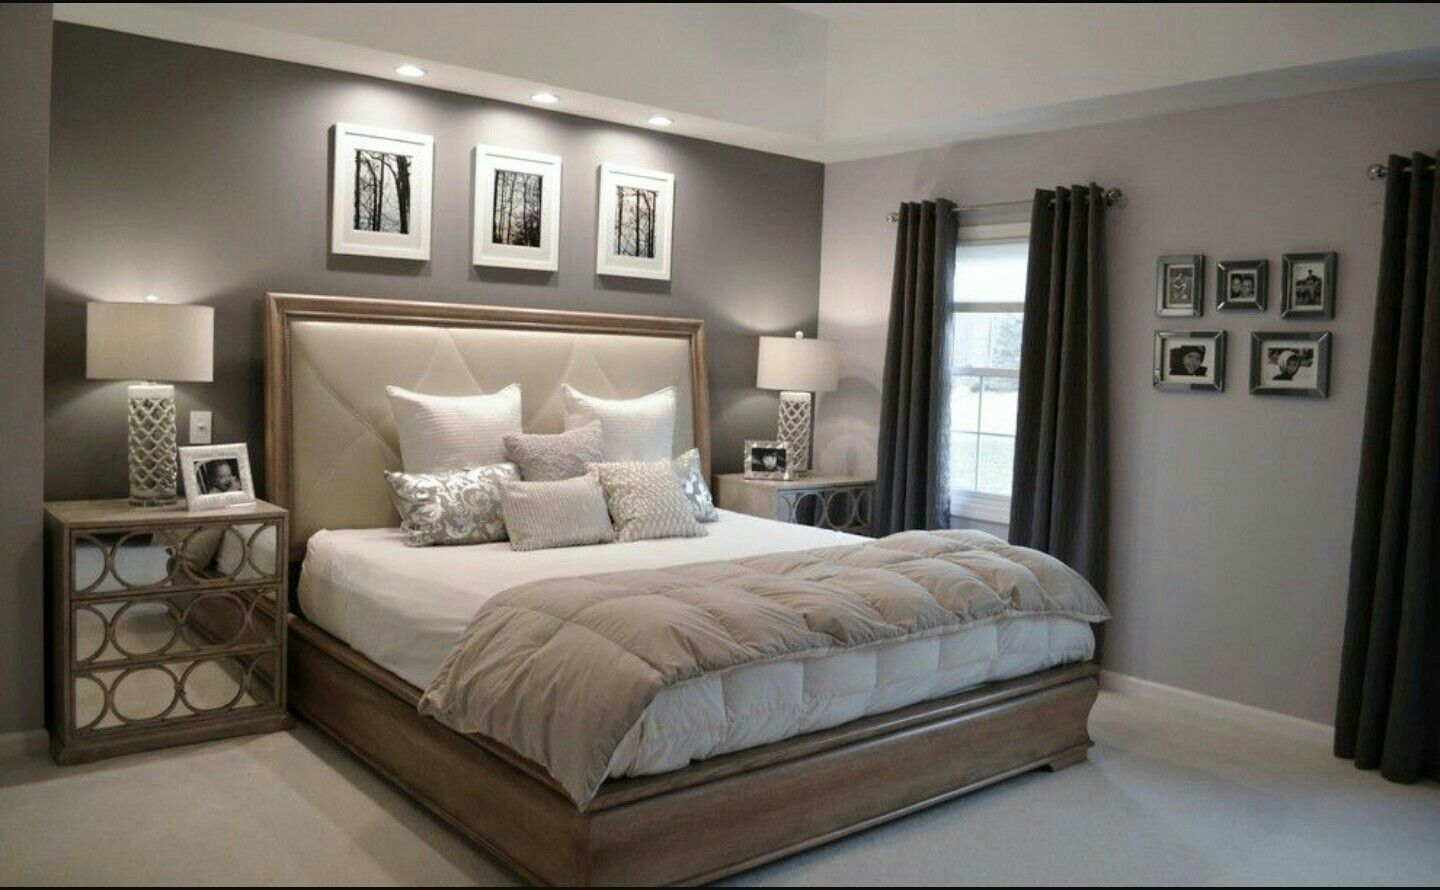 Pin Serene Ali On Dreams Bedrooms In 2019 Bedroom regarding dimensions 1440 X 890